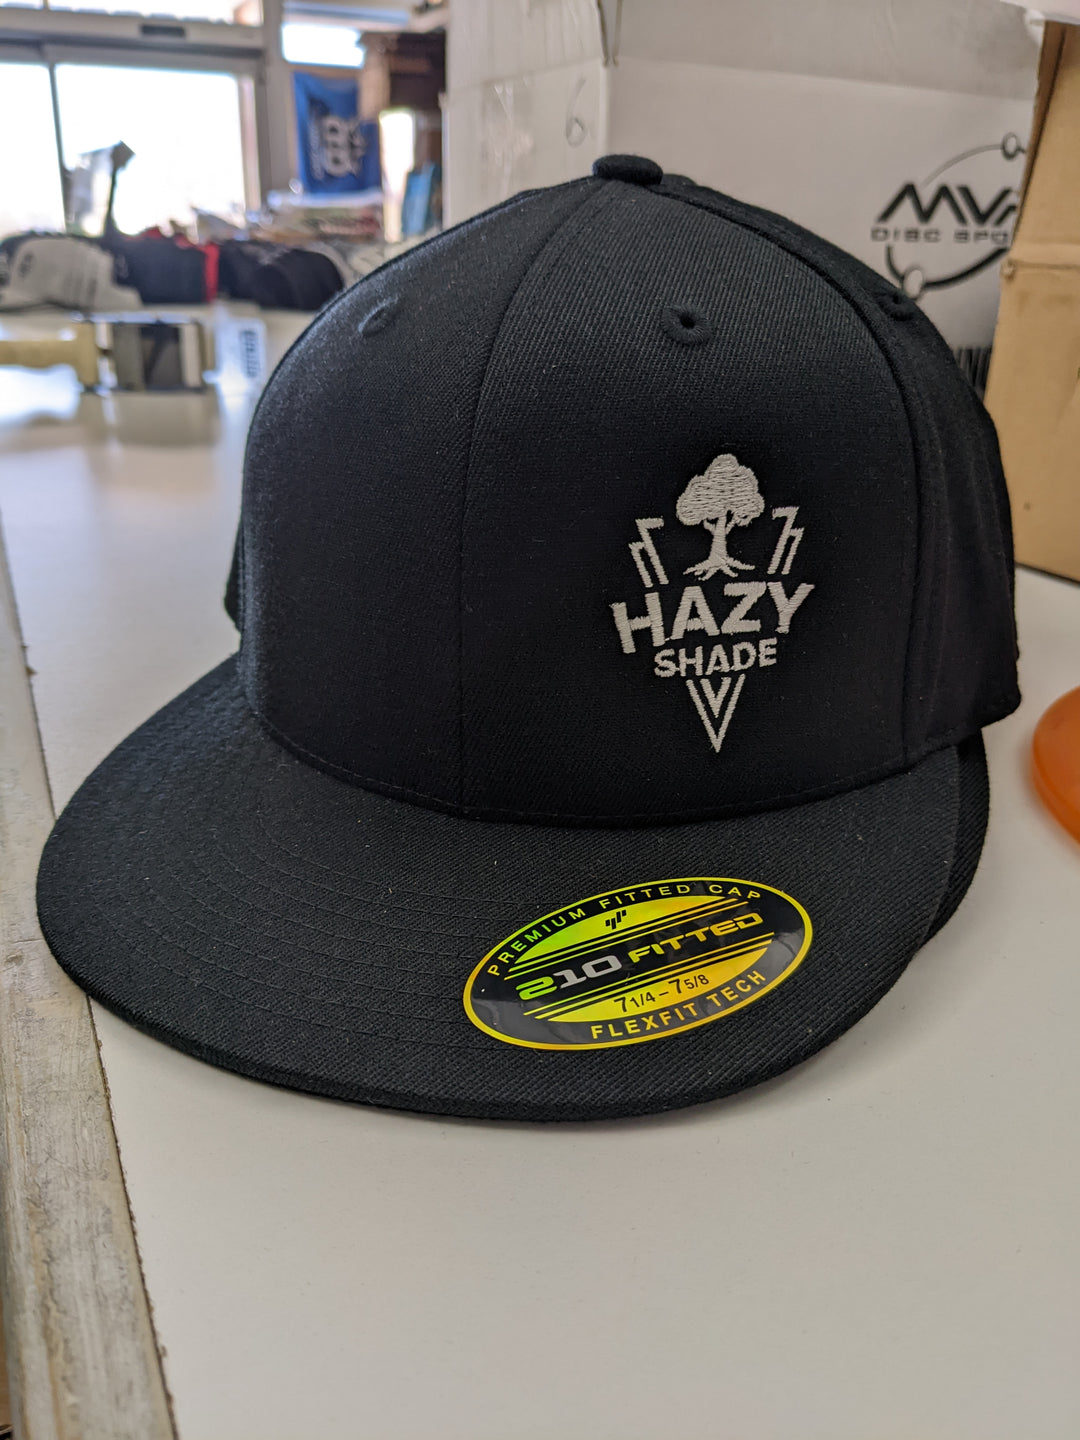 Hazy Shade 210 Fitted Flat Bill Hat Black w/ Triangle Logo